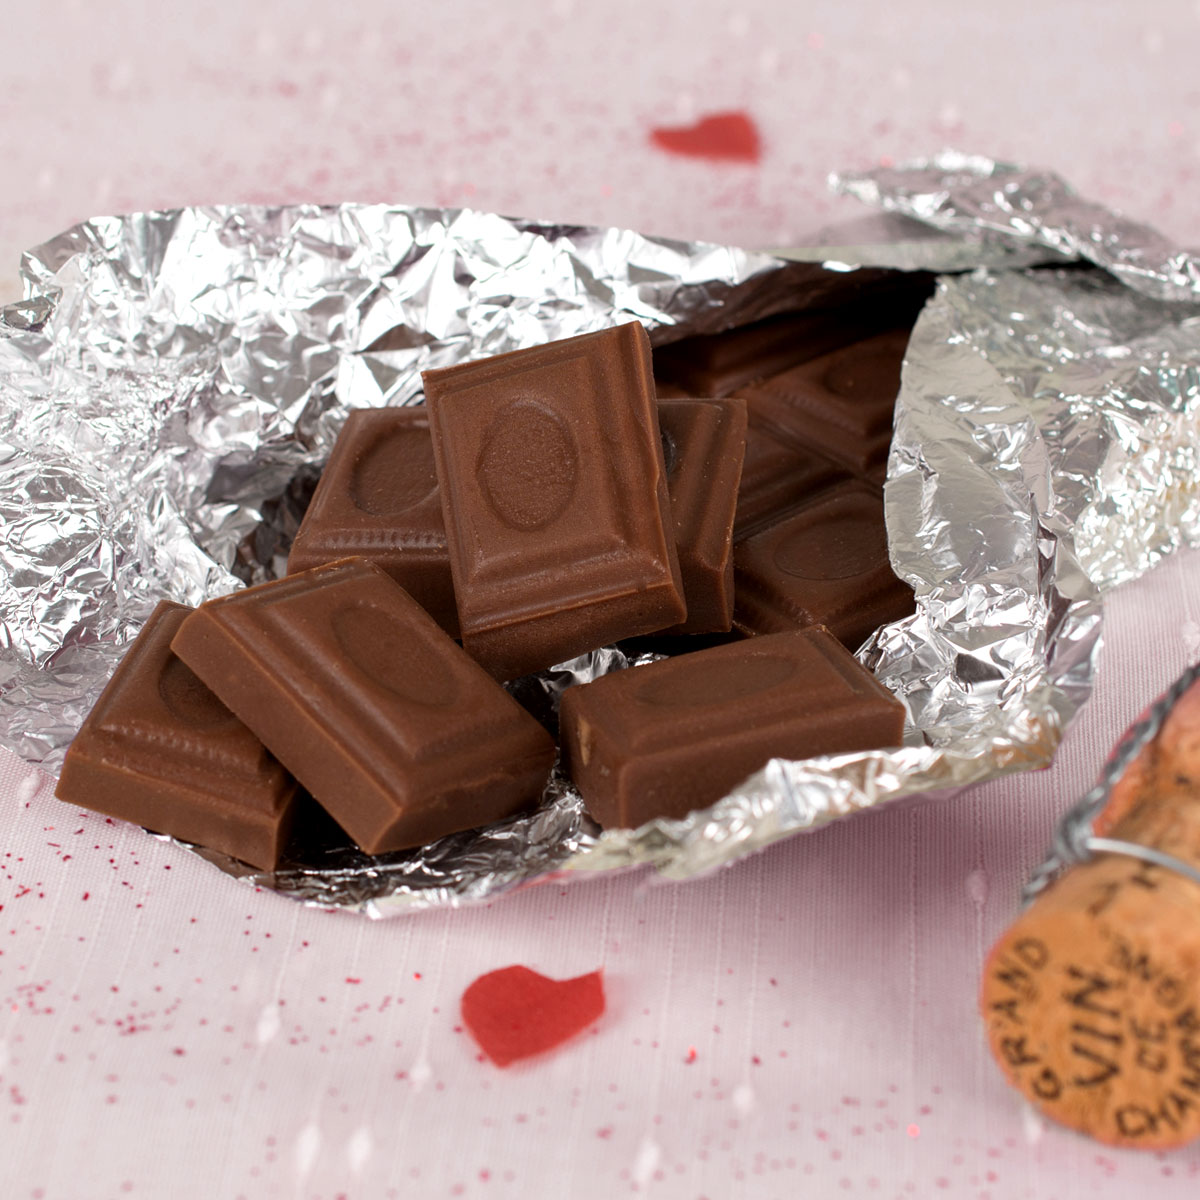 Personalised Chocolate Bar - I Heart You